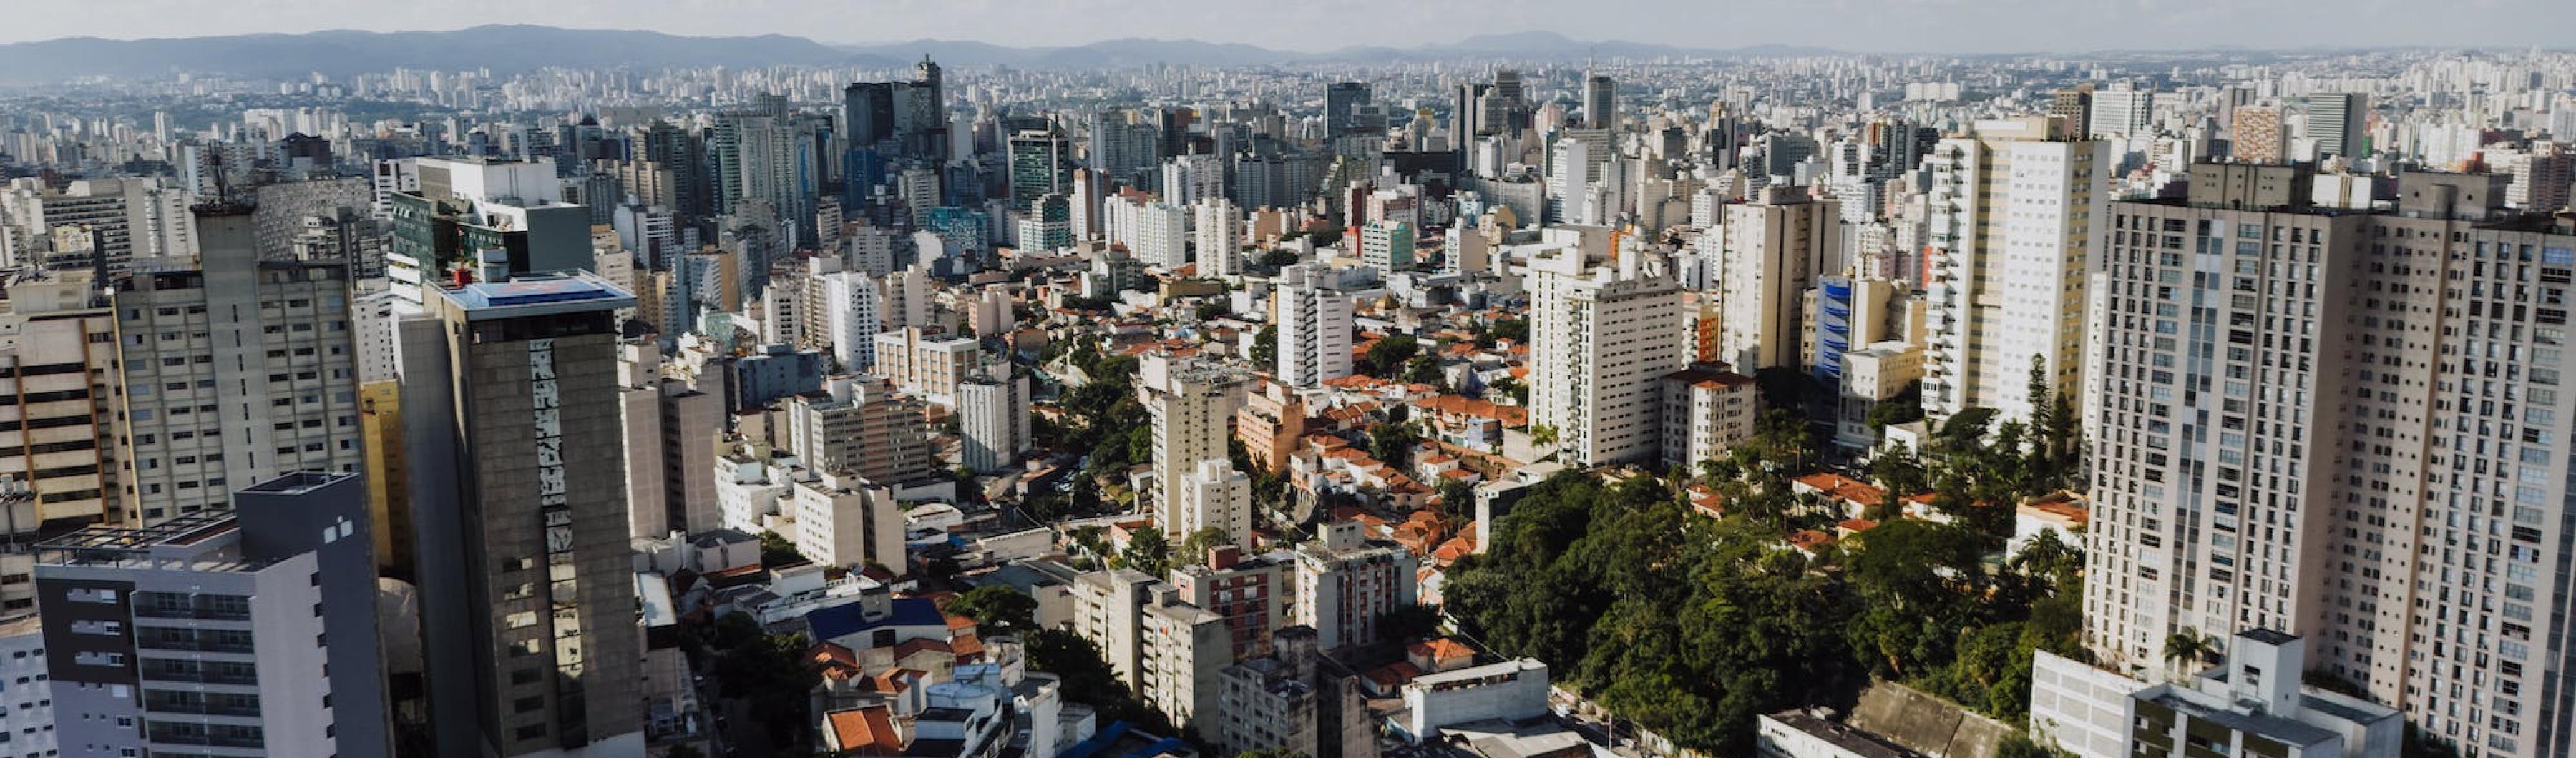 Photo of Sao Paulo skyline